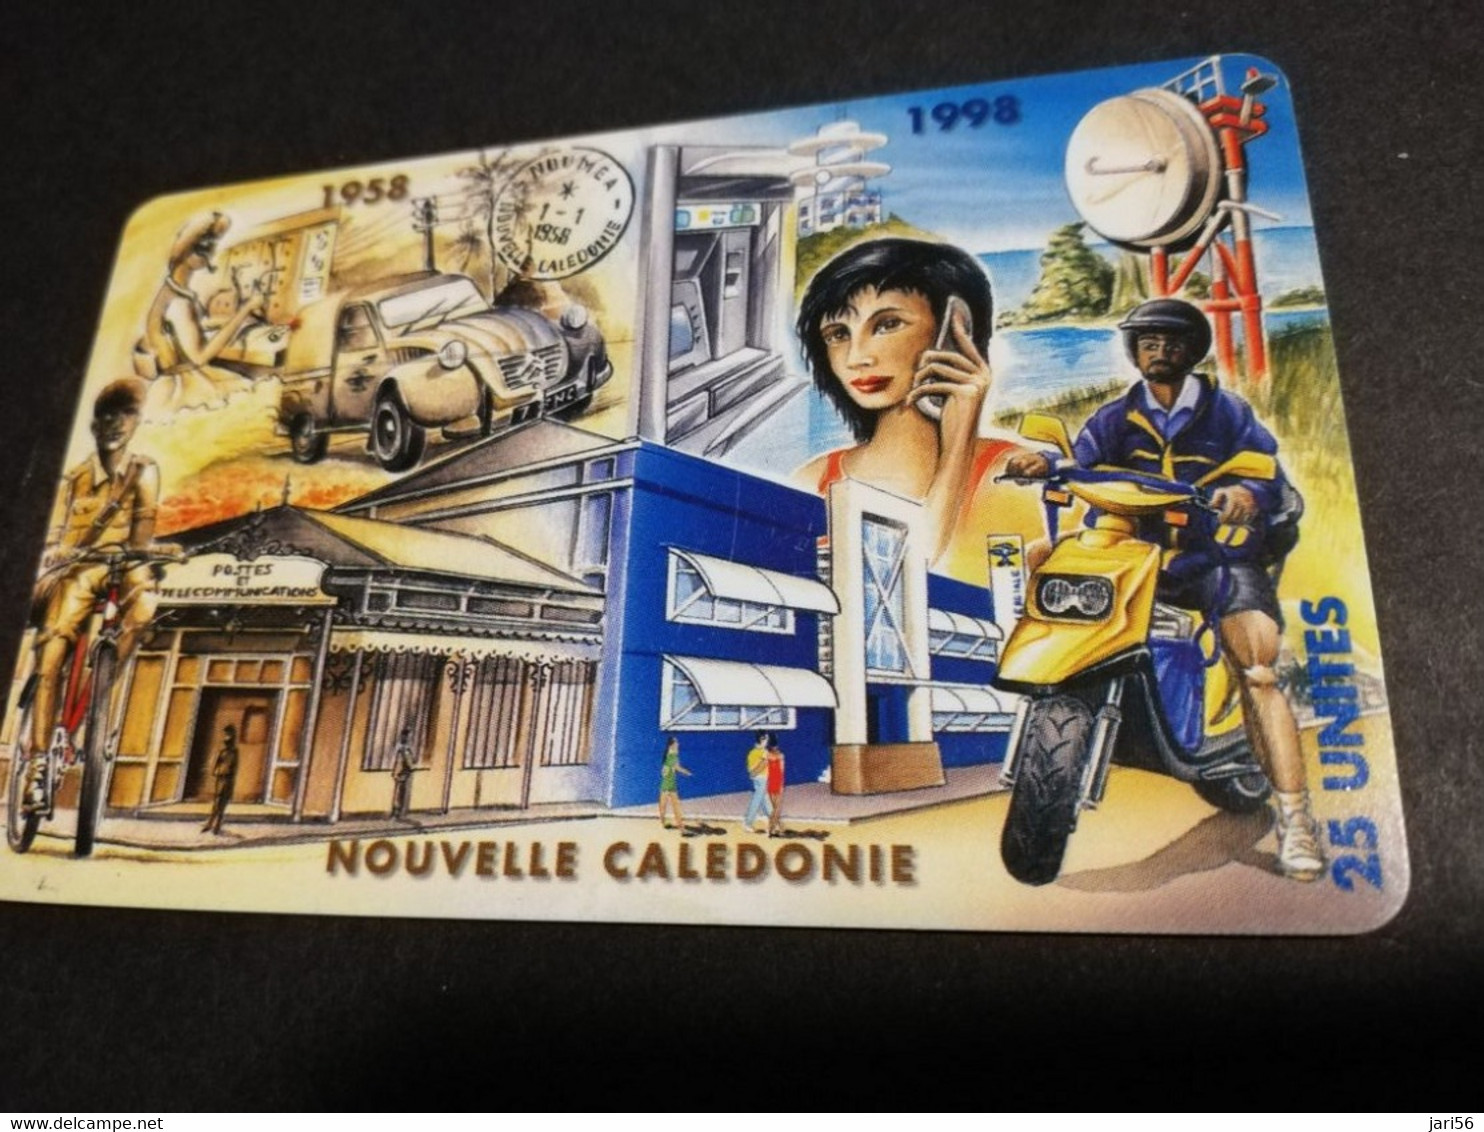 NOUVELLE CALEDONIA  CHIP CARD 25  UNITS   40EME ANNIVERSAIRE 1958-1998       ** 4186 ** - Nueva Caledonia